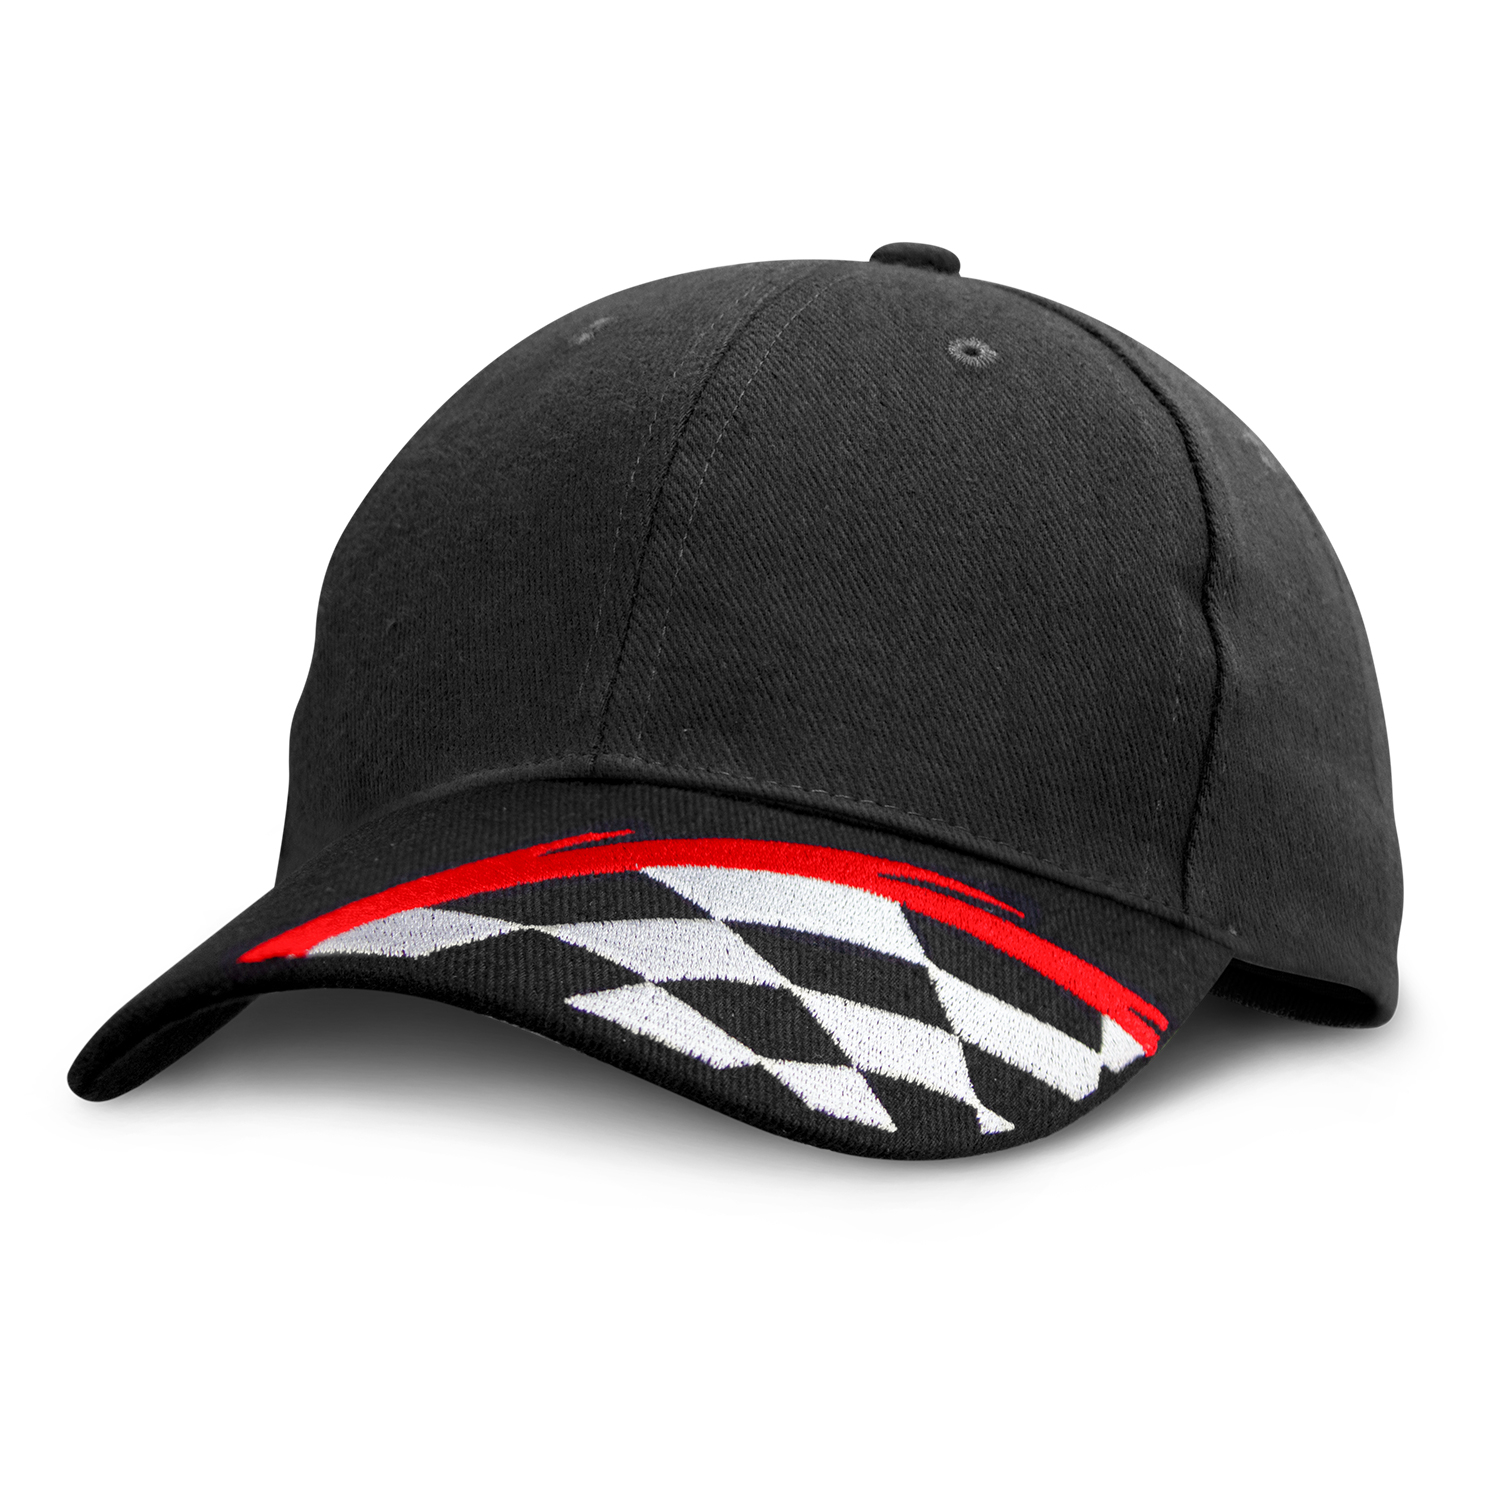 Headwear Express Formula Cap cap